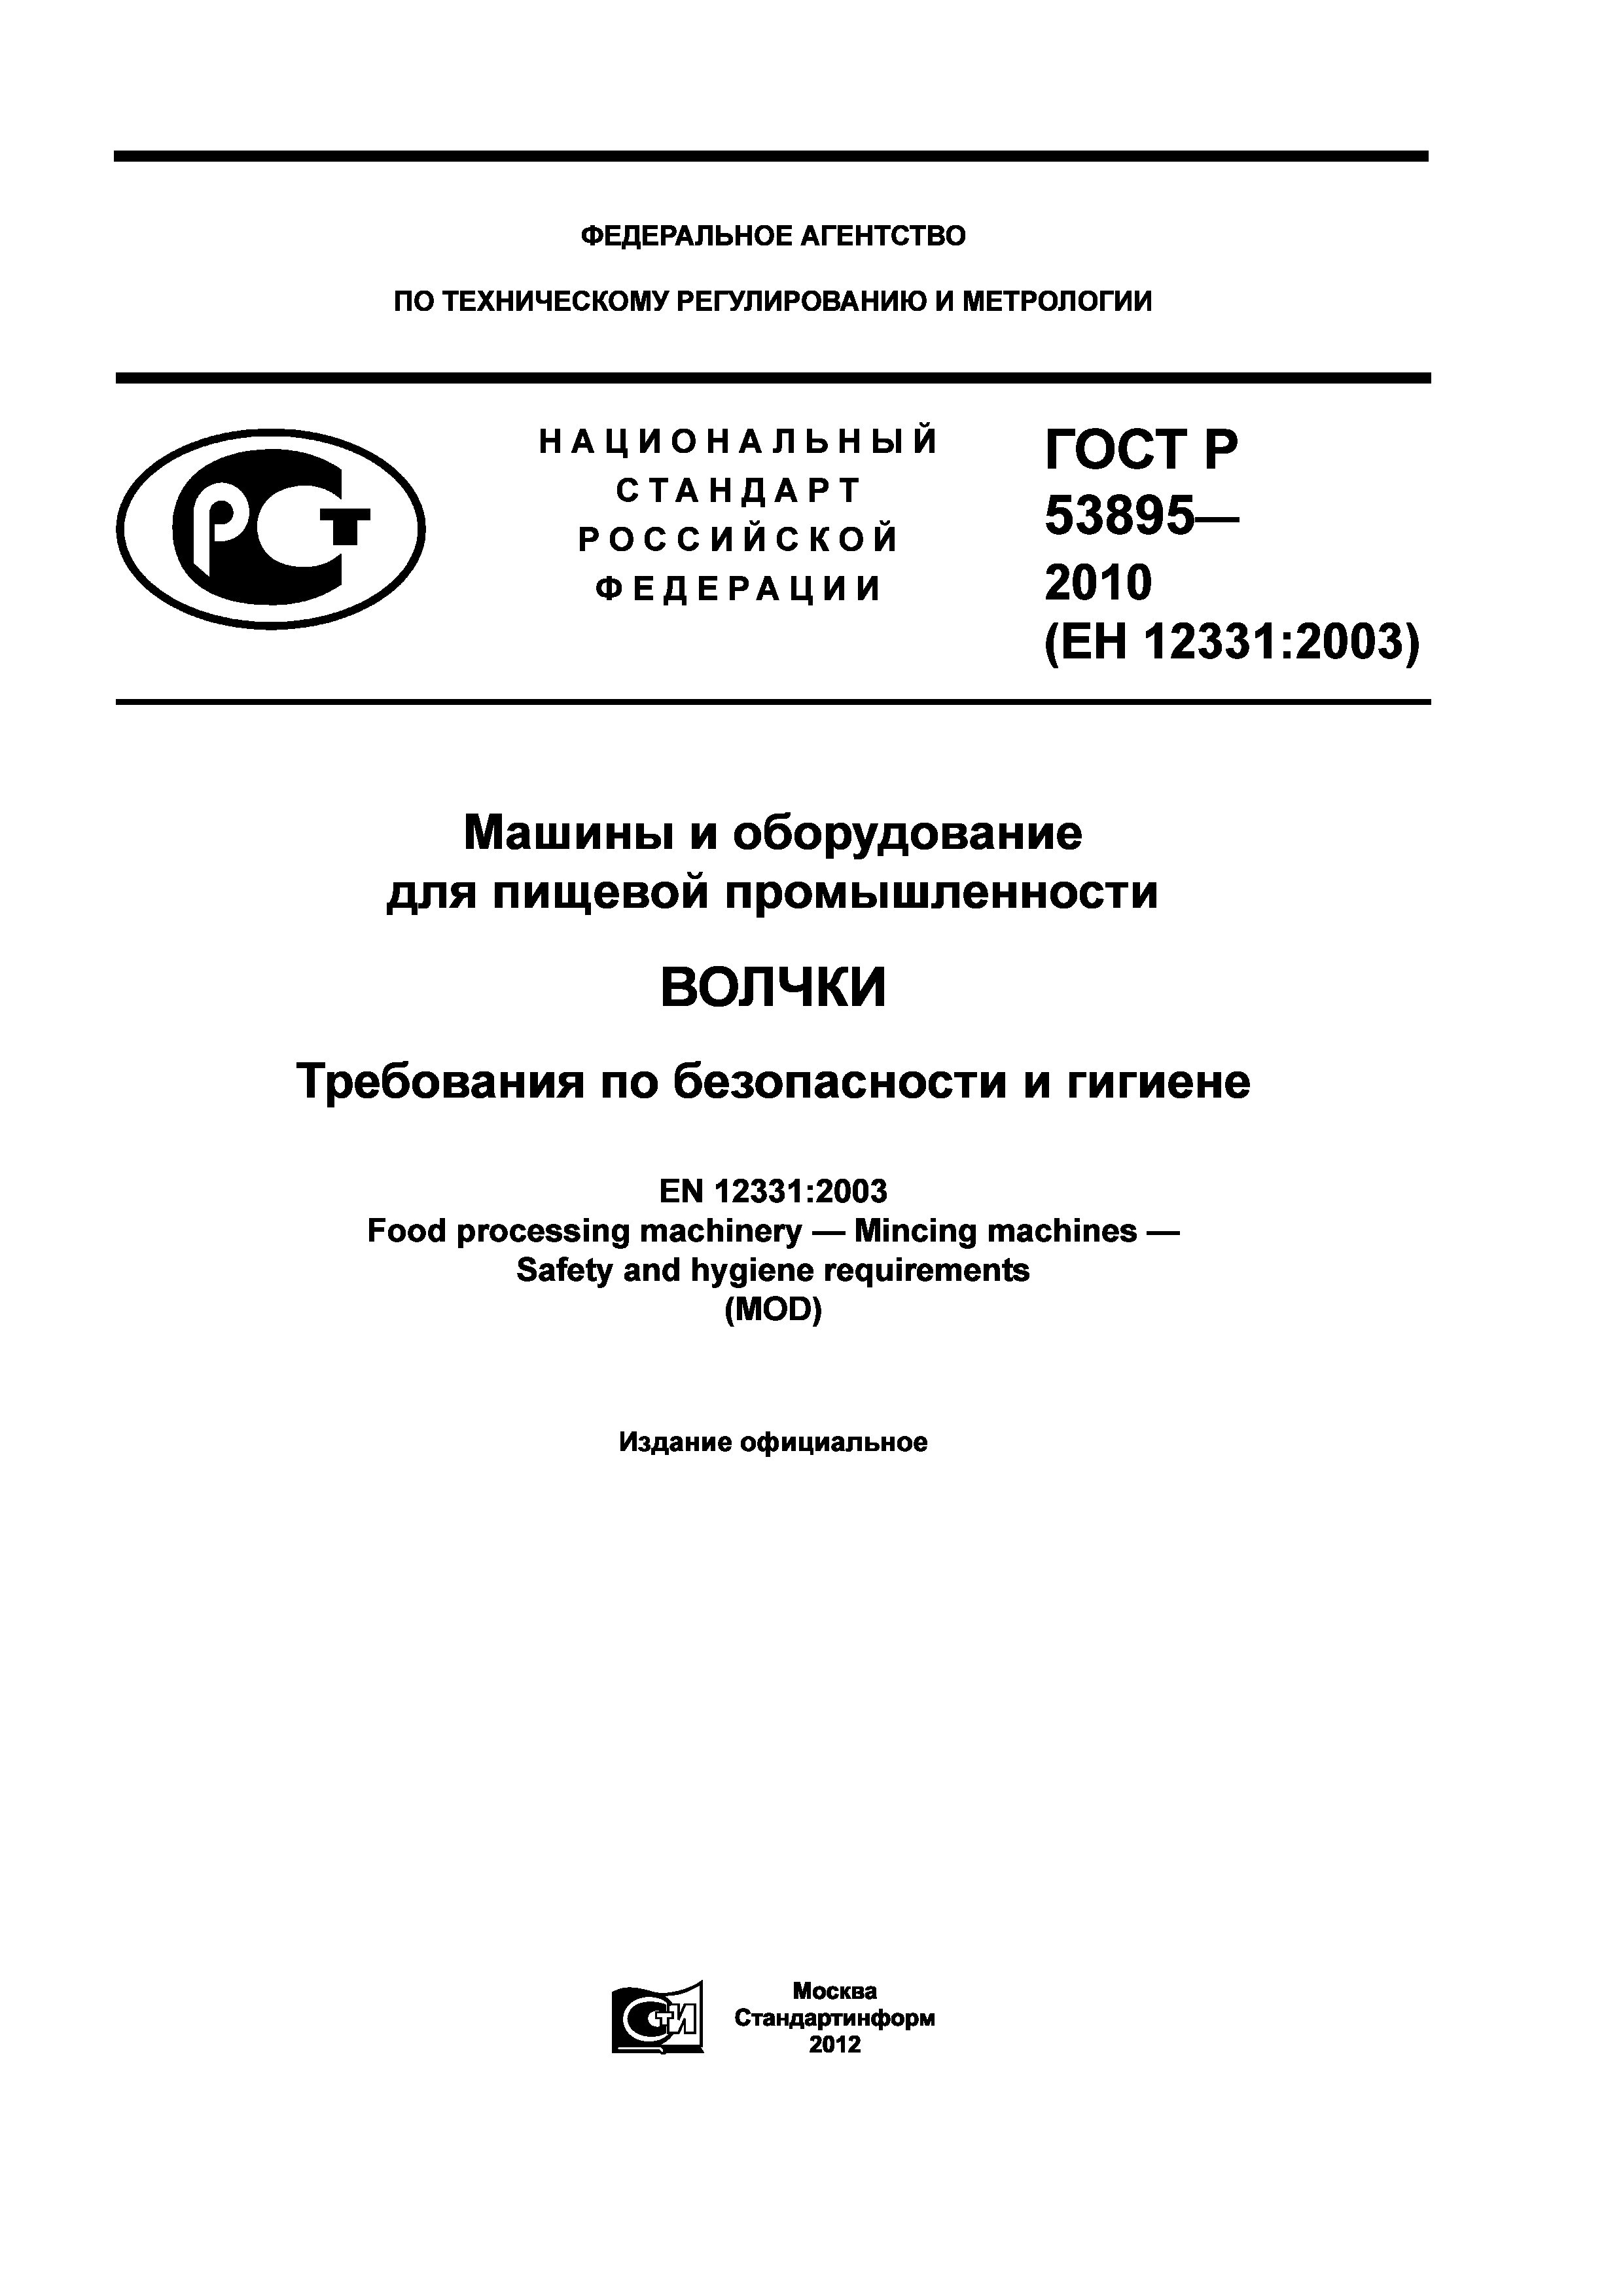 ГОСТ Р 53895-2010